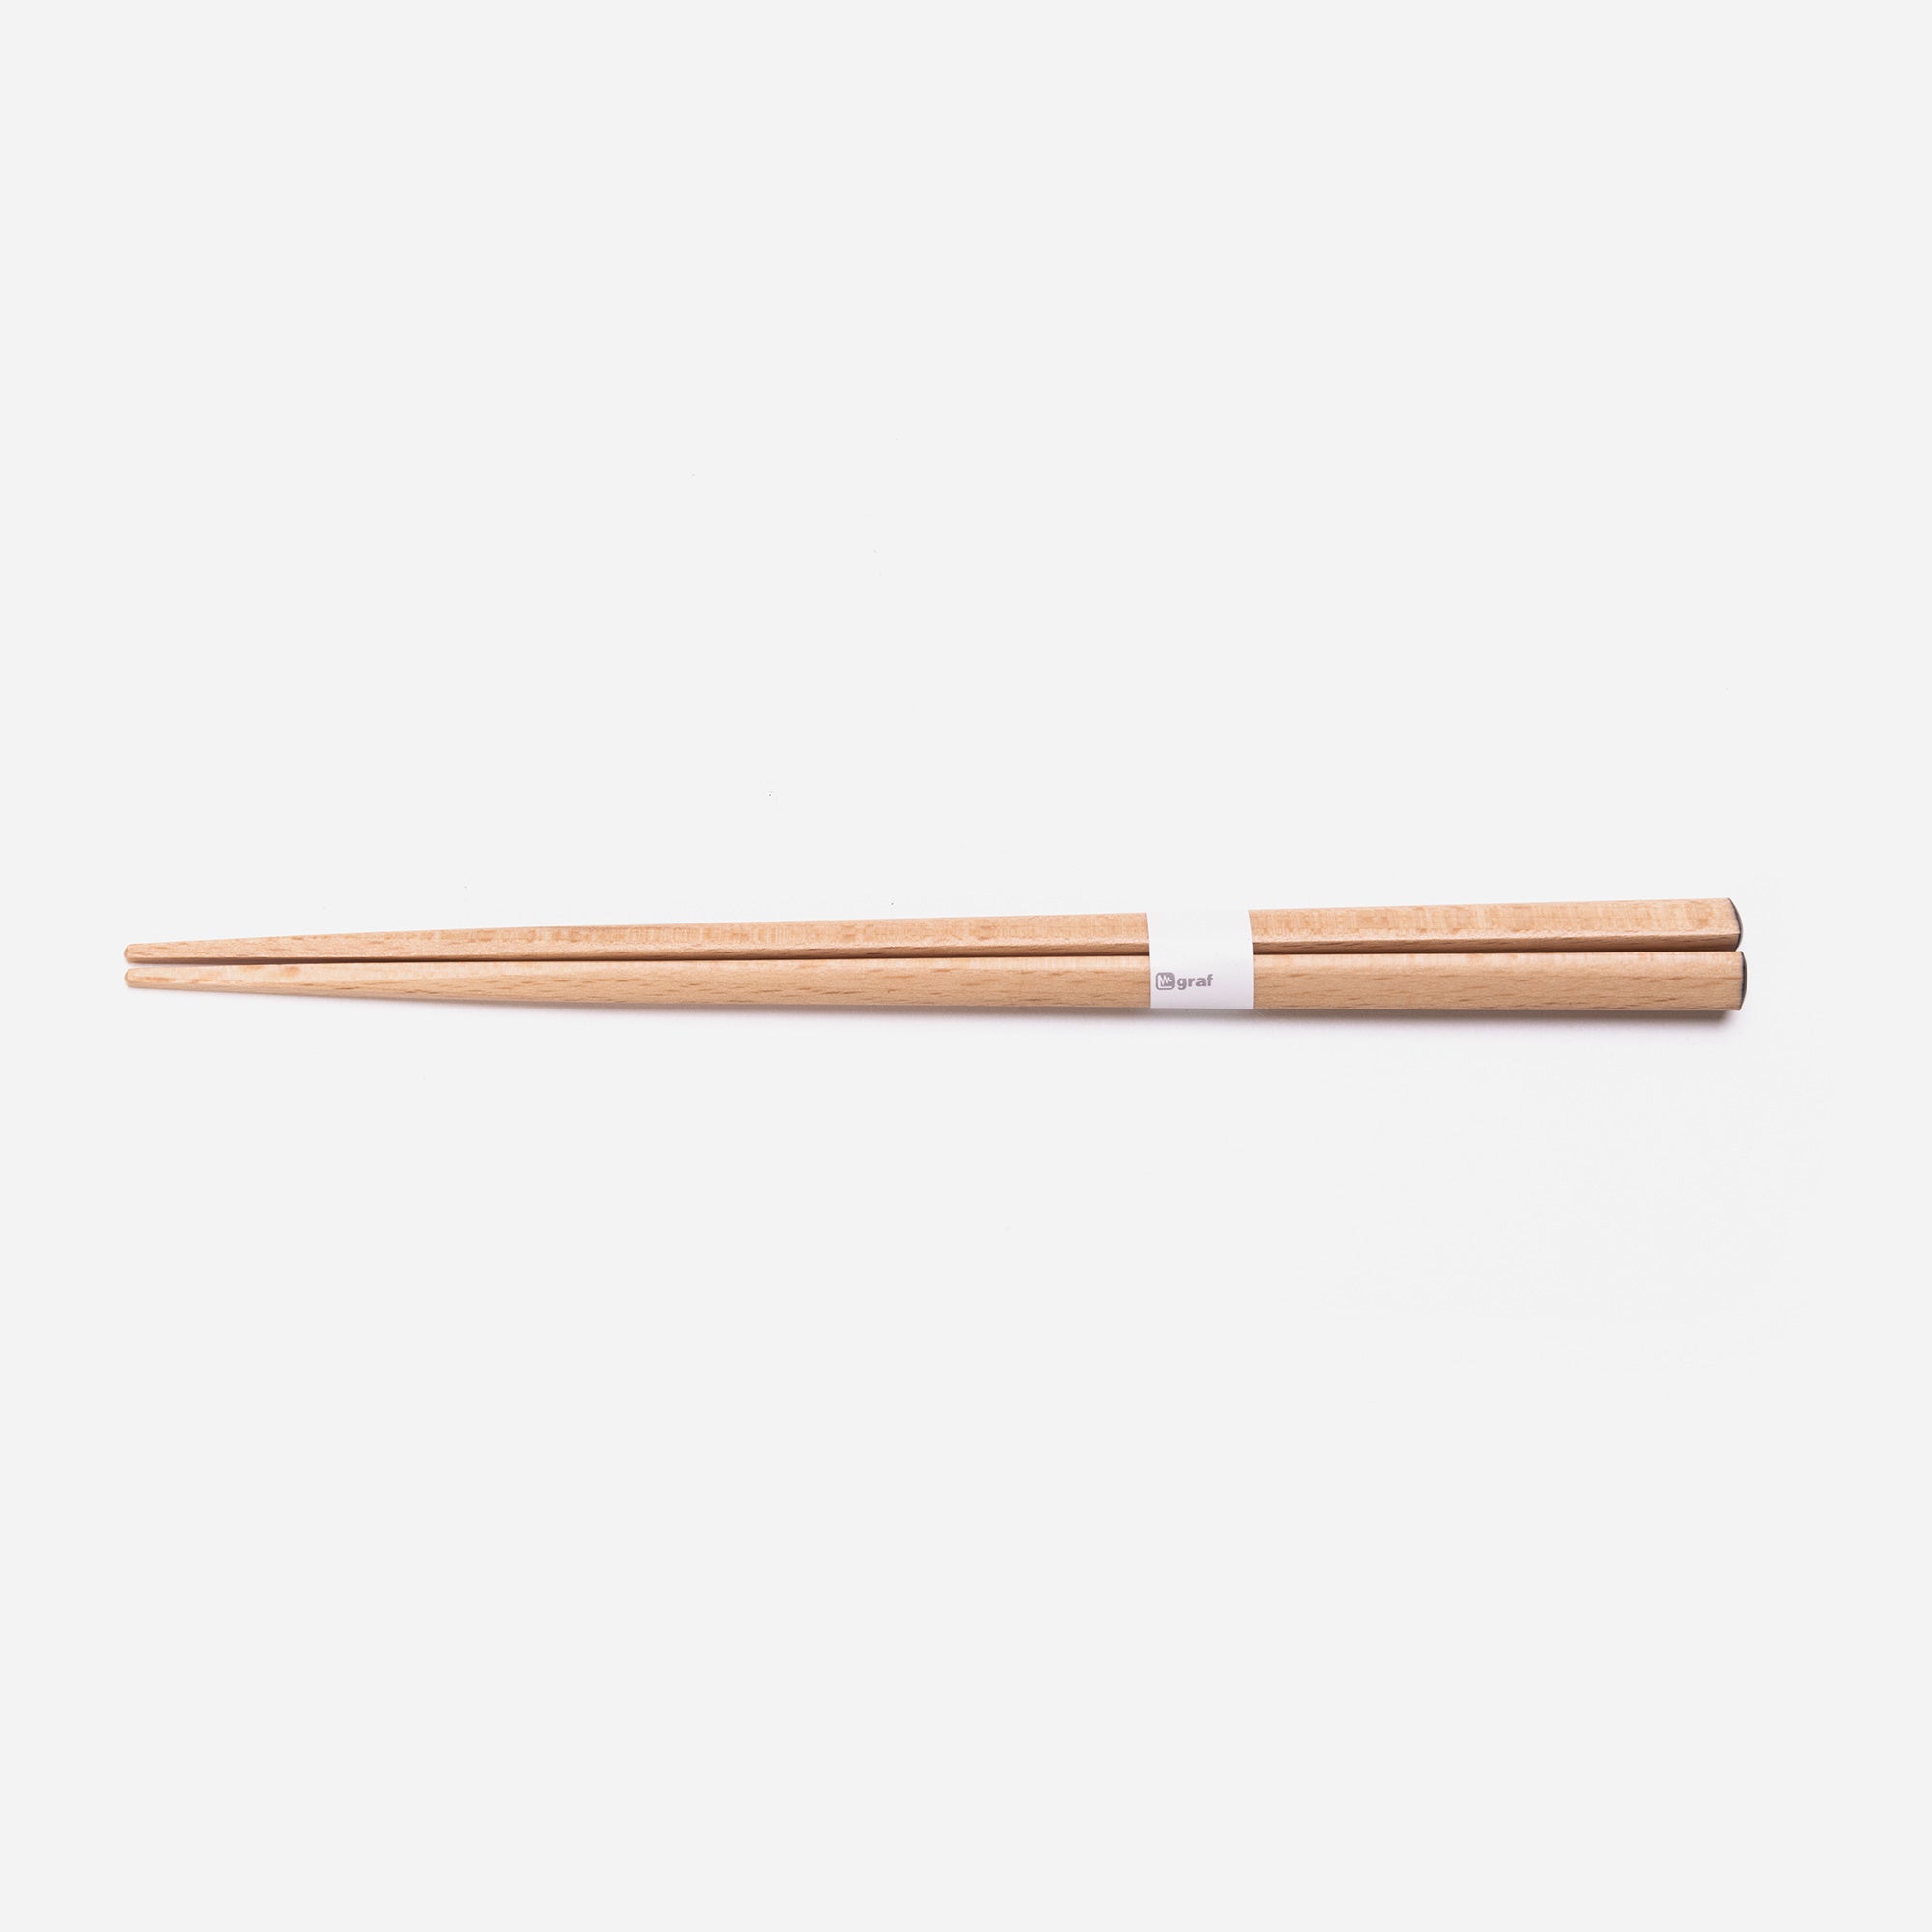 Graf chopstick